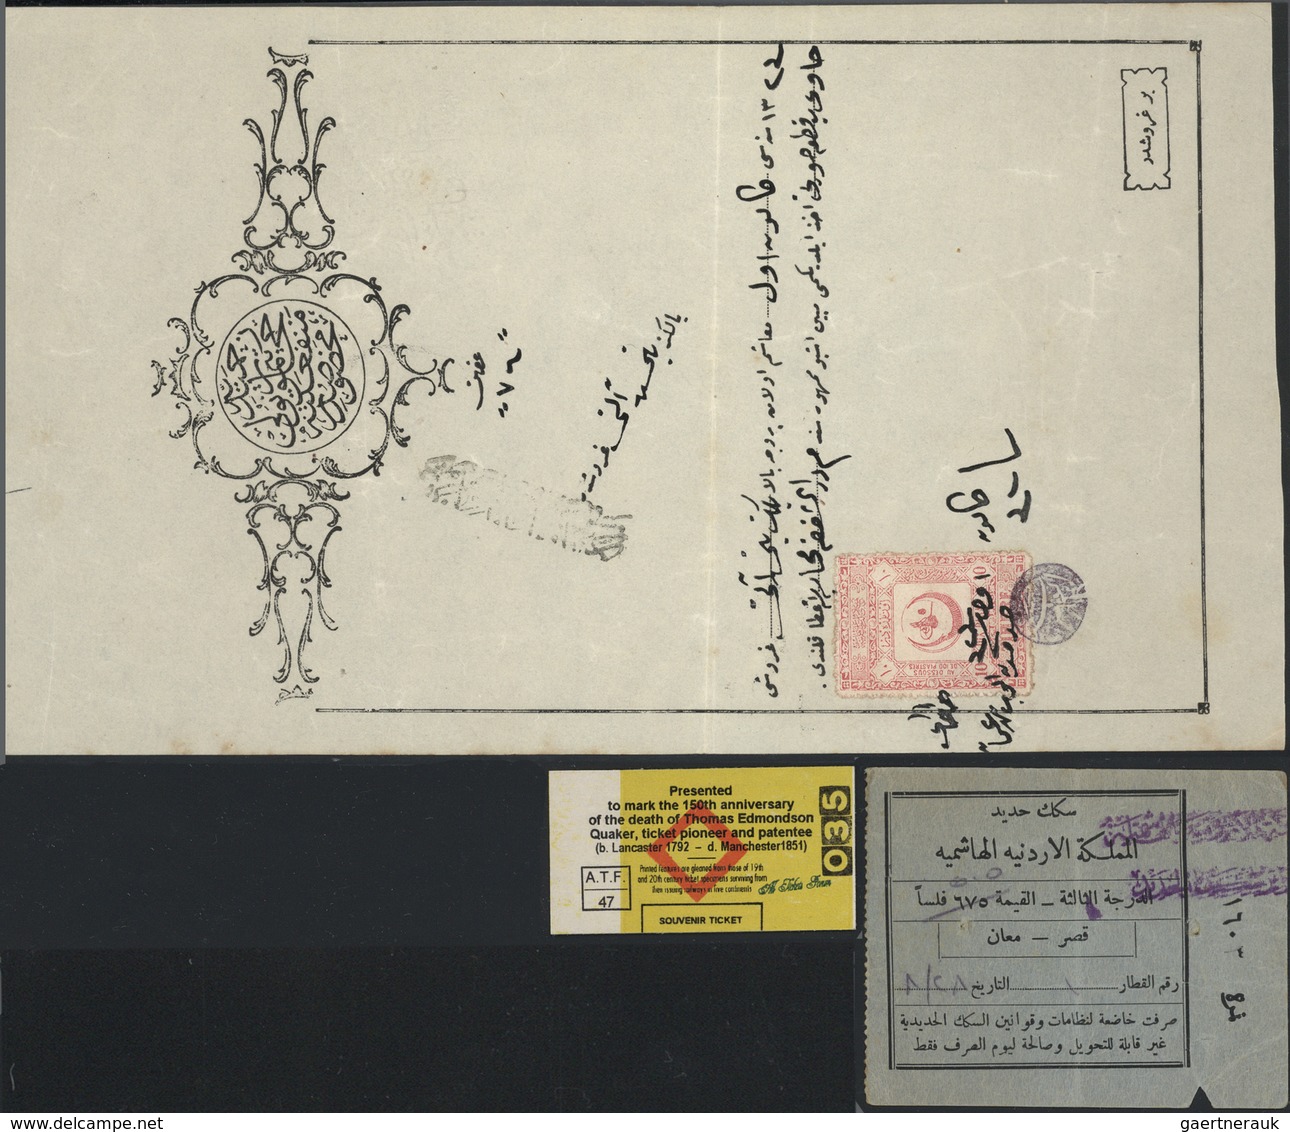 23965 Saudi-Arabien: 1900-20, HEJAZ RAILWAY : Documents, receipts, postcards, revenues, maps, photographs,